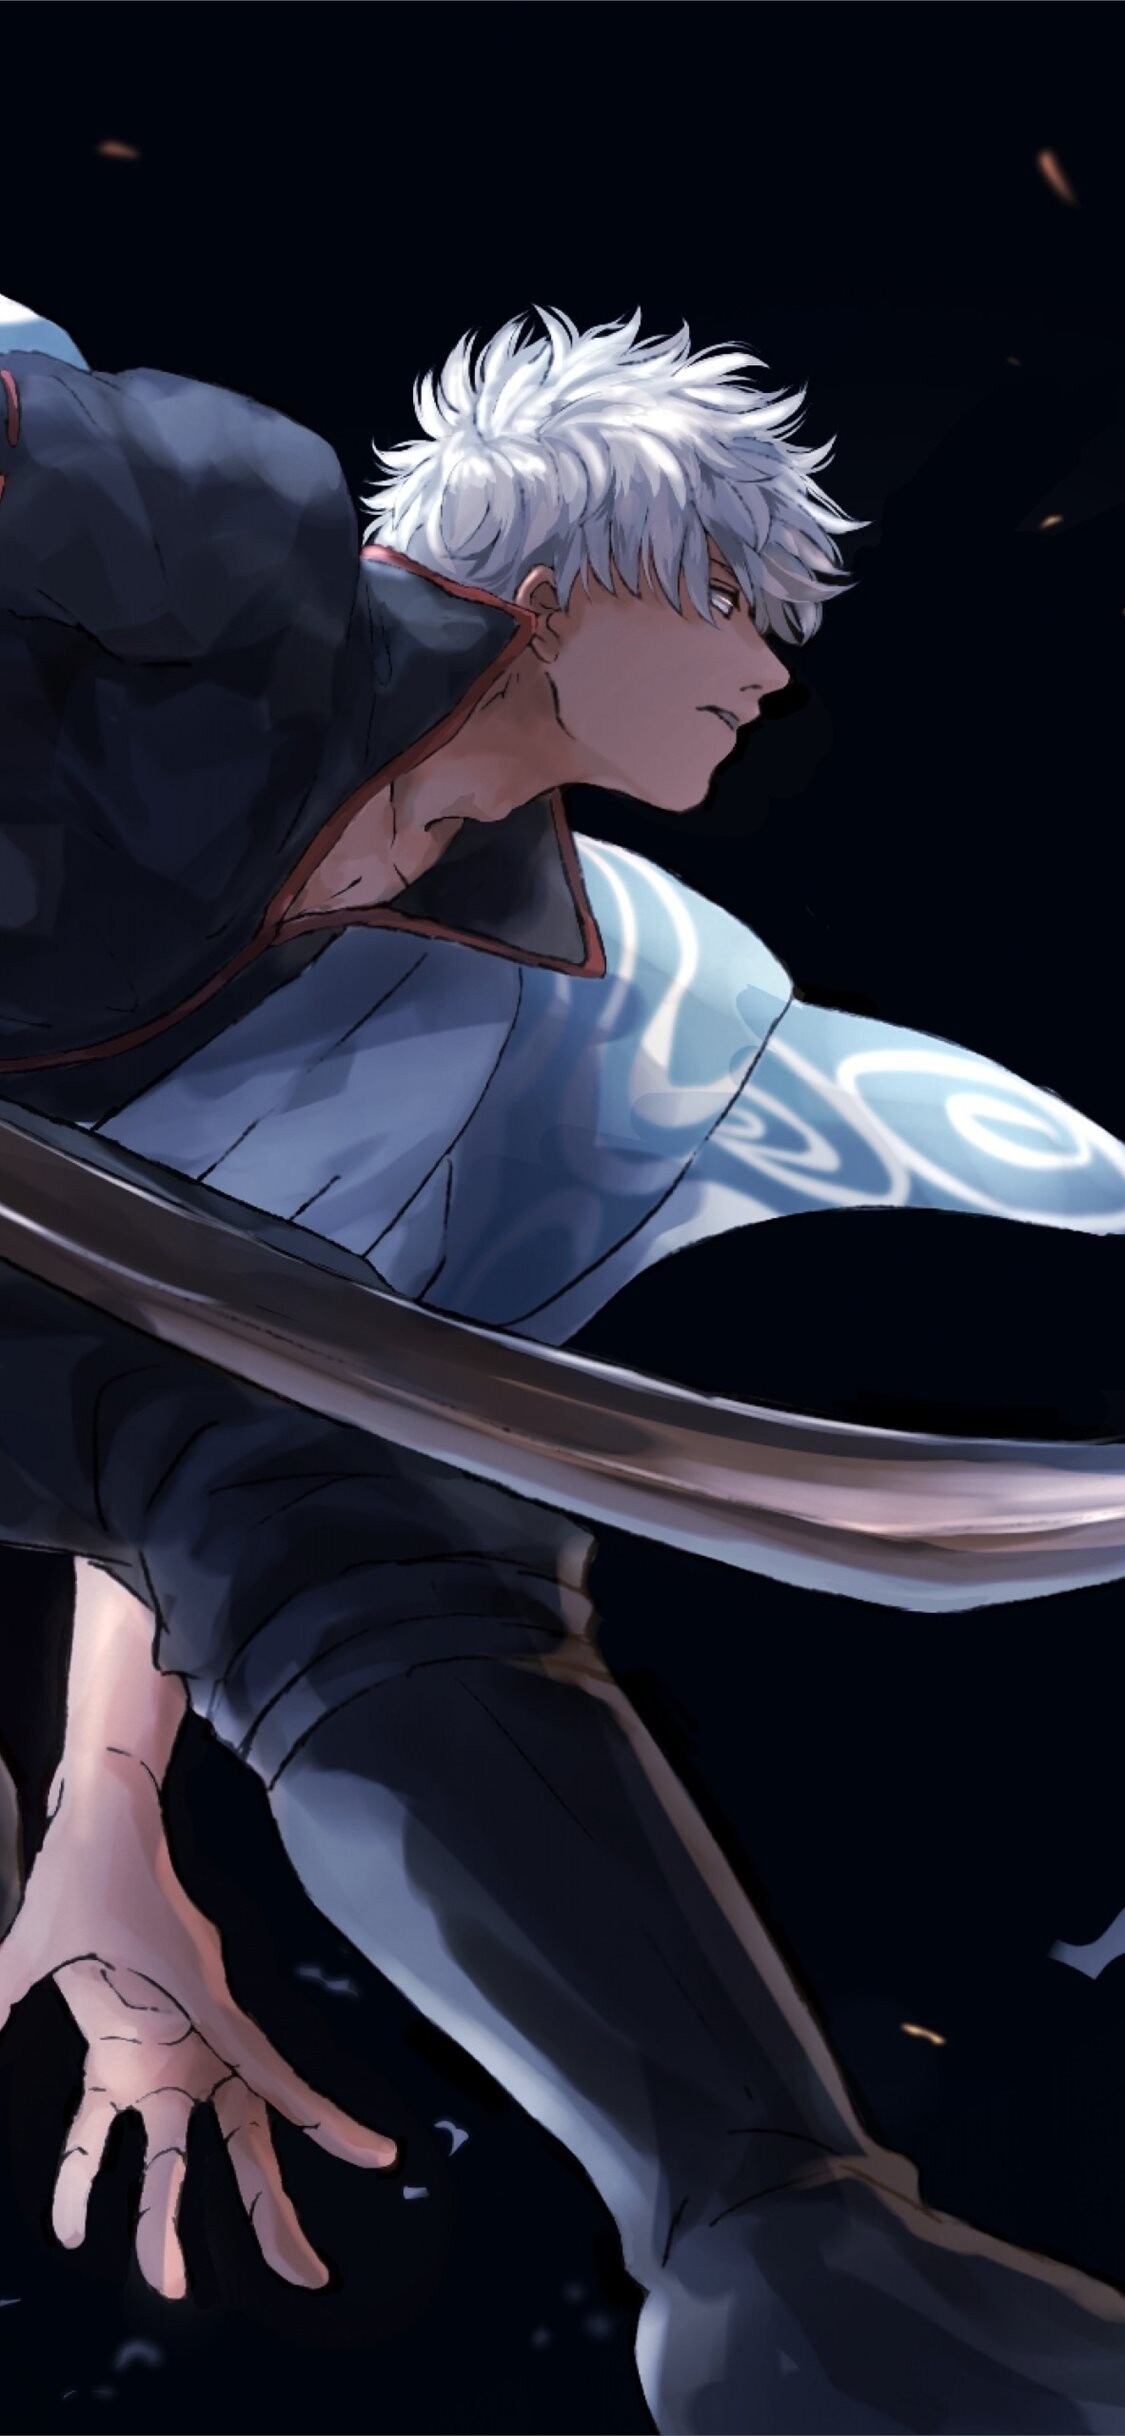 Gintoki Sakata: A veteran in the Joui War, Powerful swordplay and range of abilities, Nickname: “Shiroyasha”. 1130x2440 HD Wallpaper.